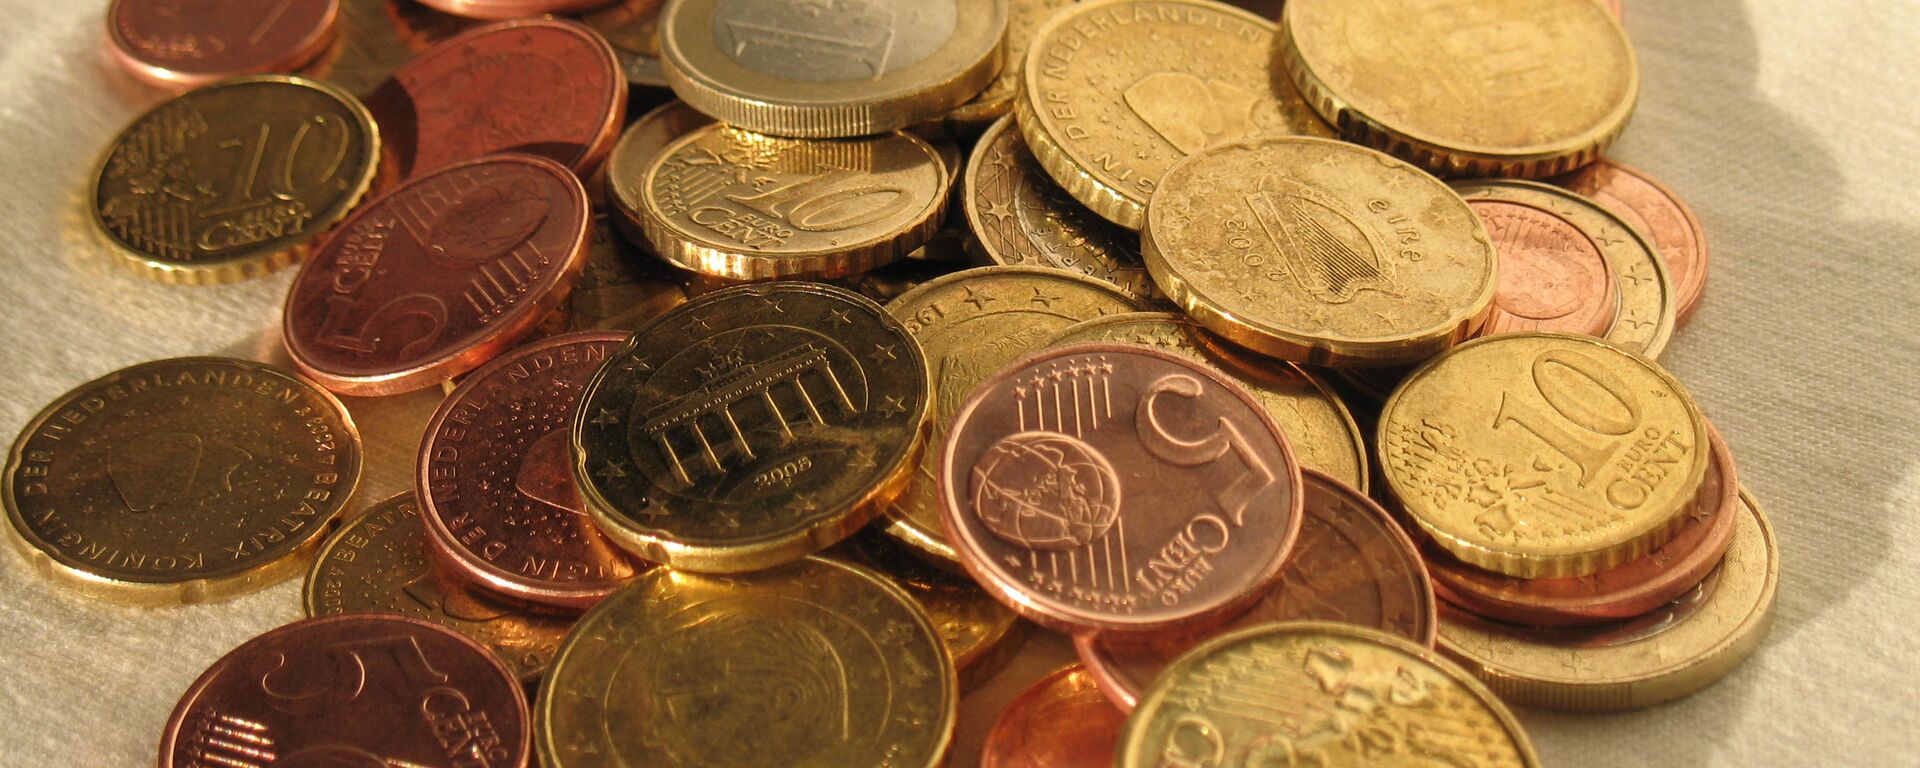 Евро, монеты - Sputnik Latvija, 1920, 02.12.2020